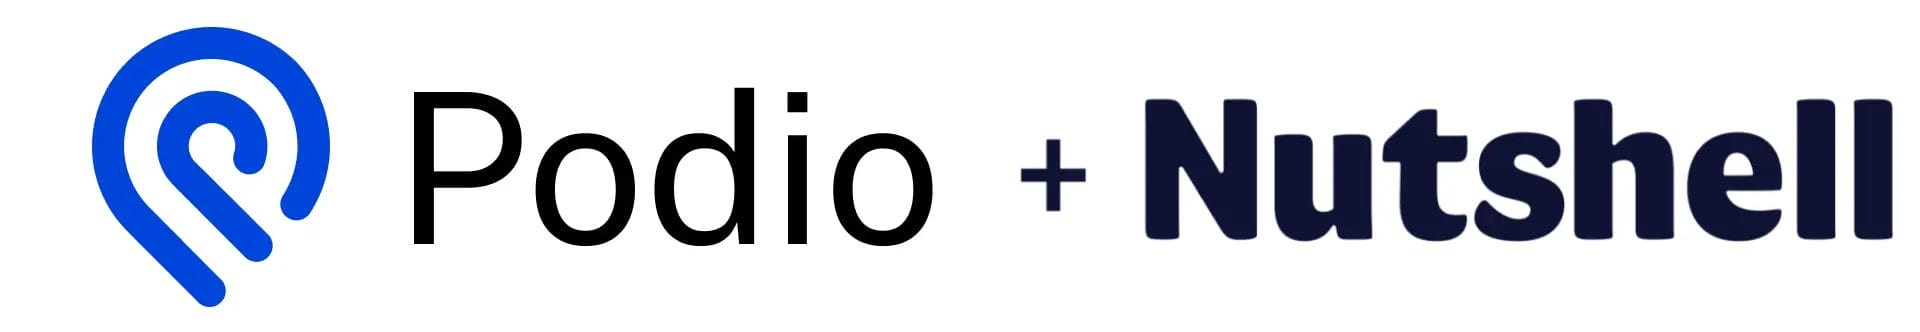 Podio and Nutshell logos integration graphic